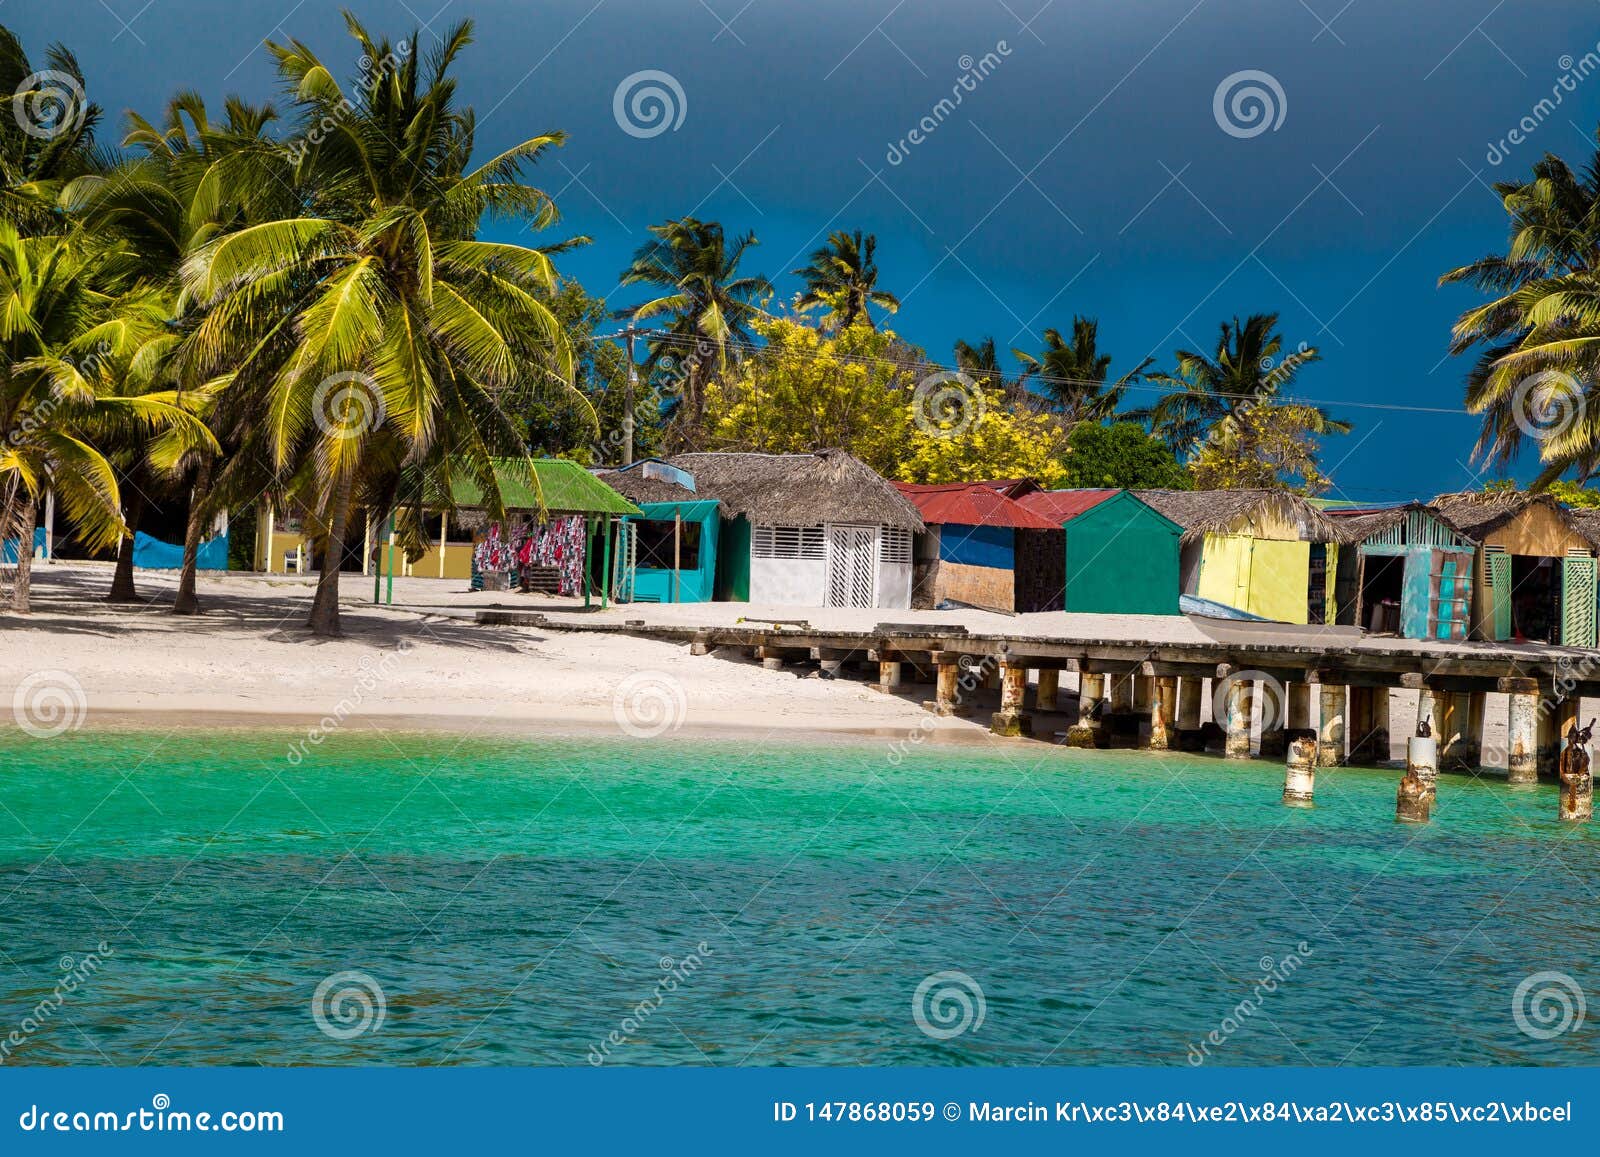 dominican republic, punta cana, saona island - mano juan beach.